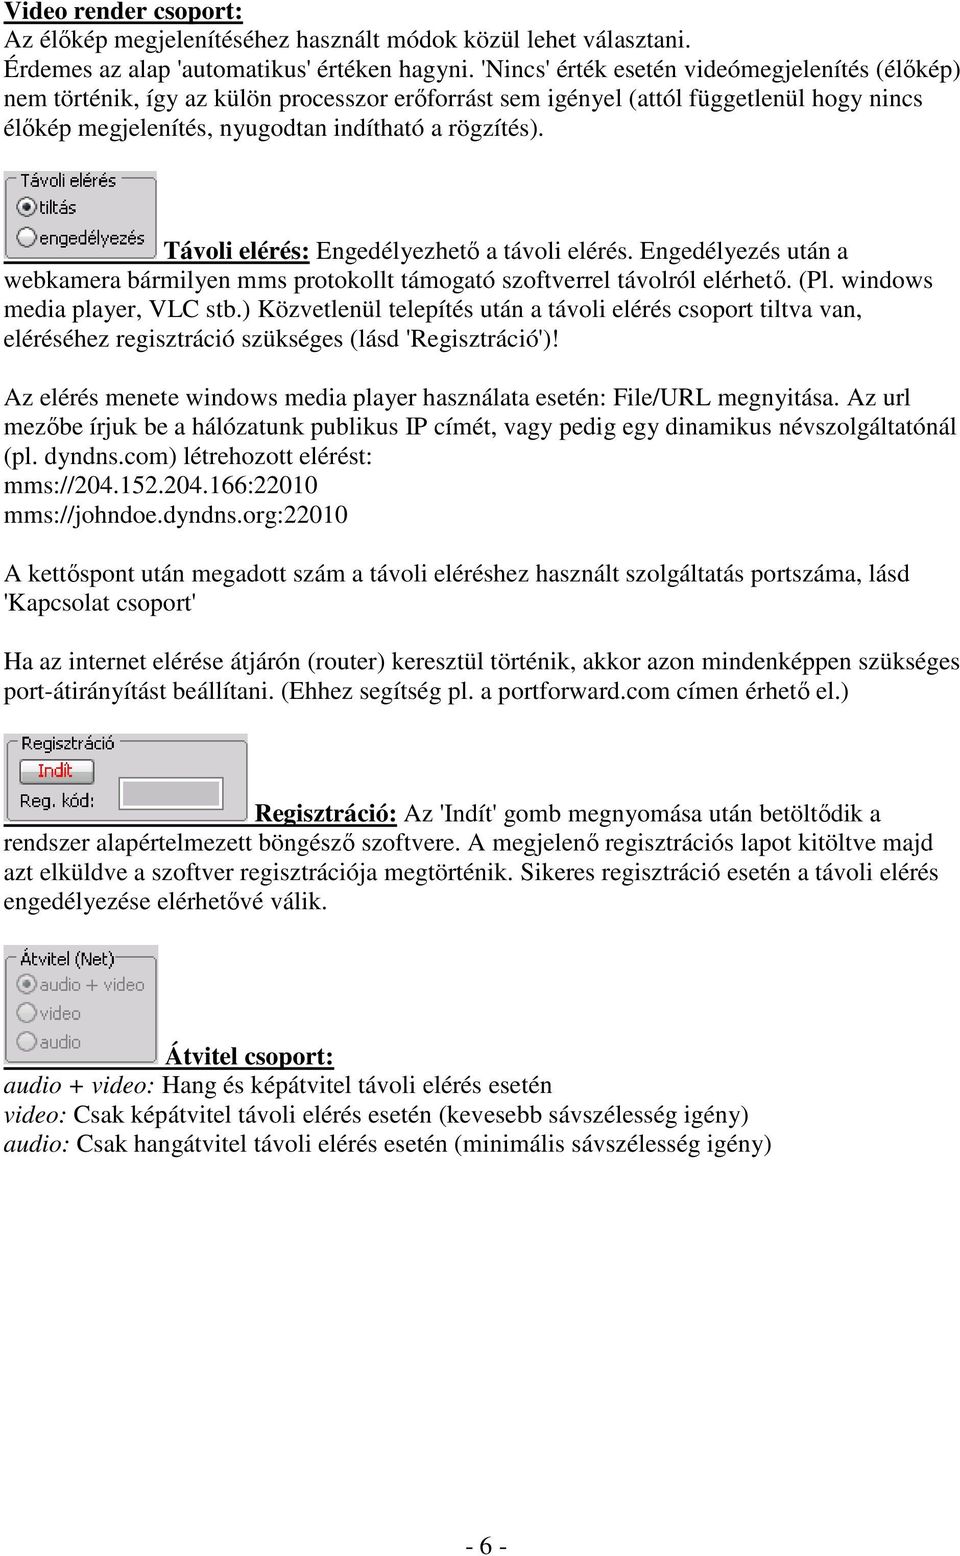 ASM USB Kamera használati útmutató - PDF Free Download